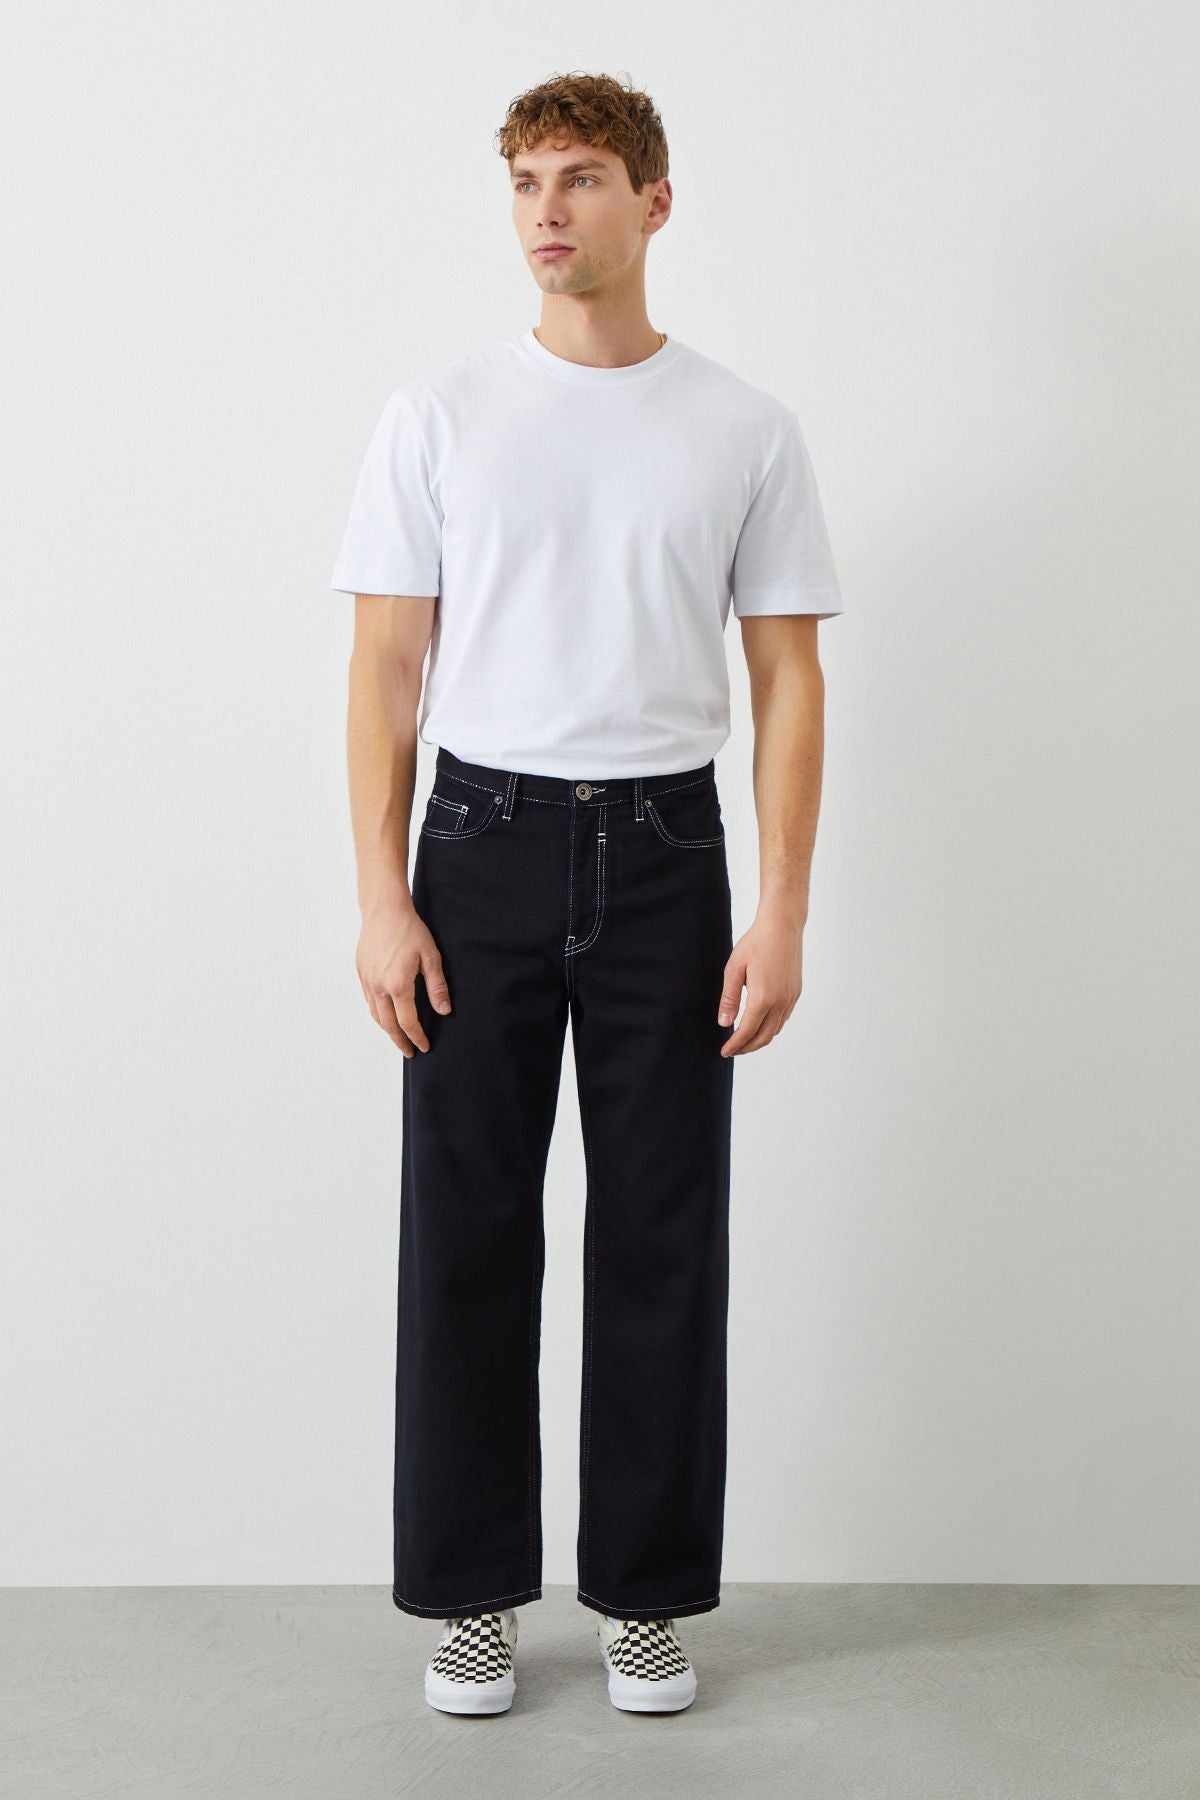  Ra Denim-Molde Baggy Fit Stay Black Contrast Stitch Men's Jeans-2